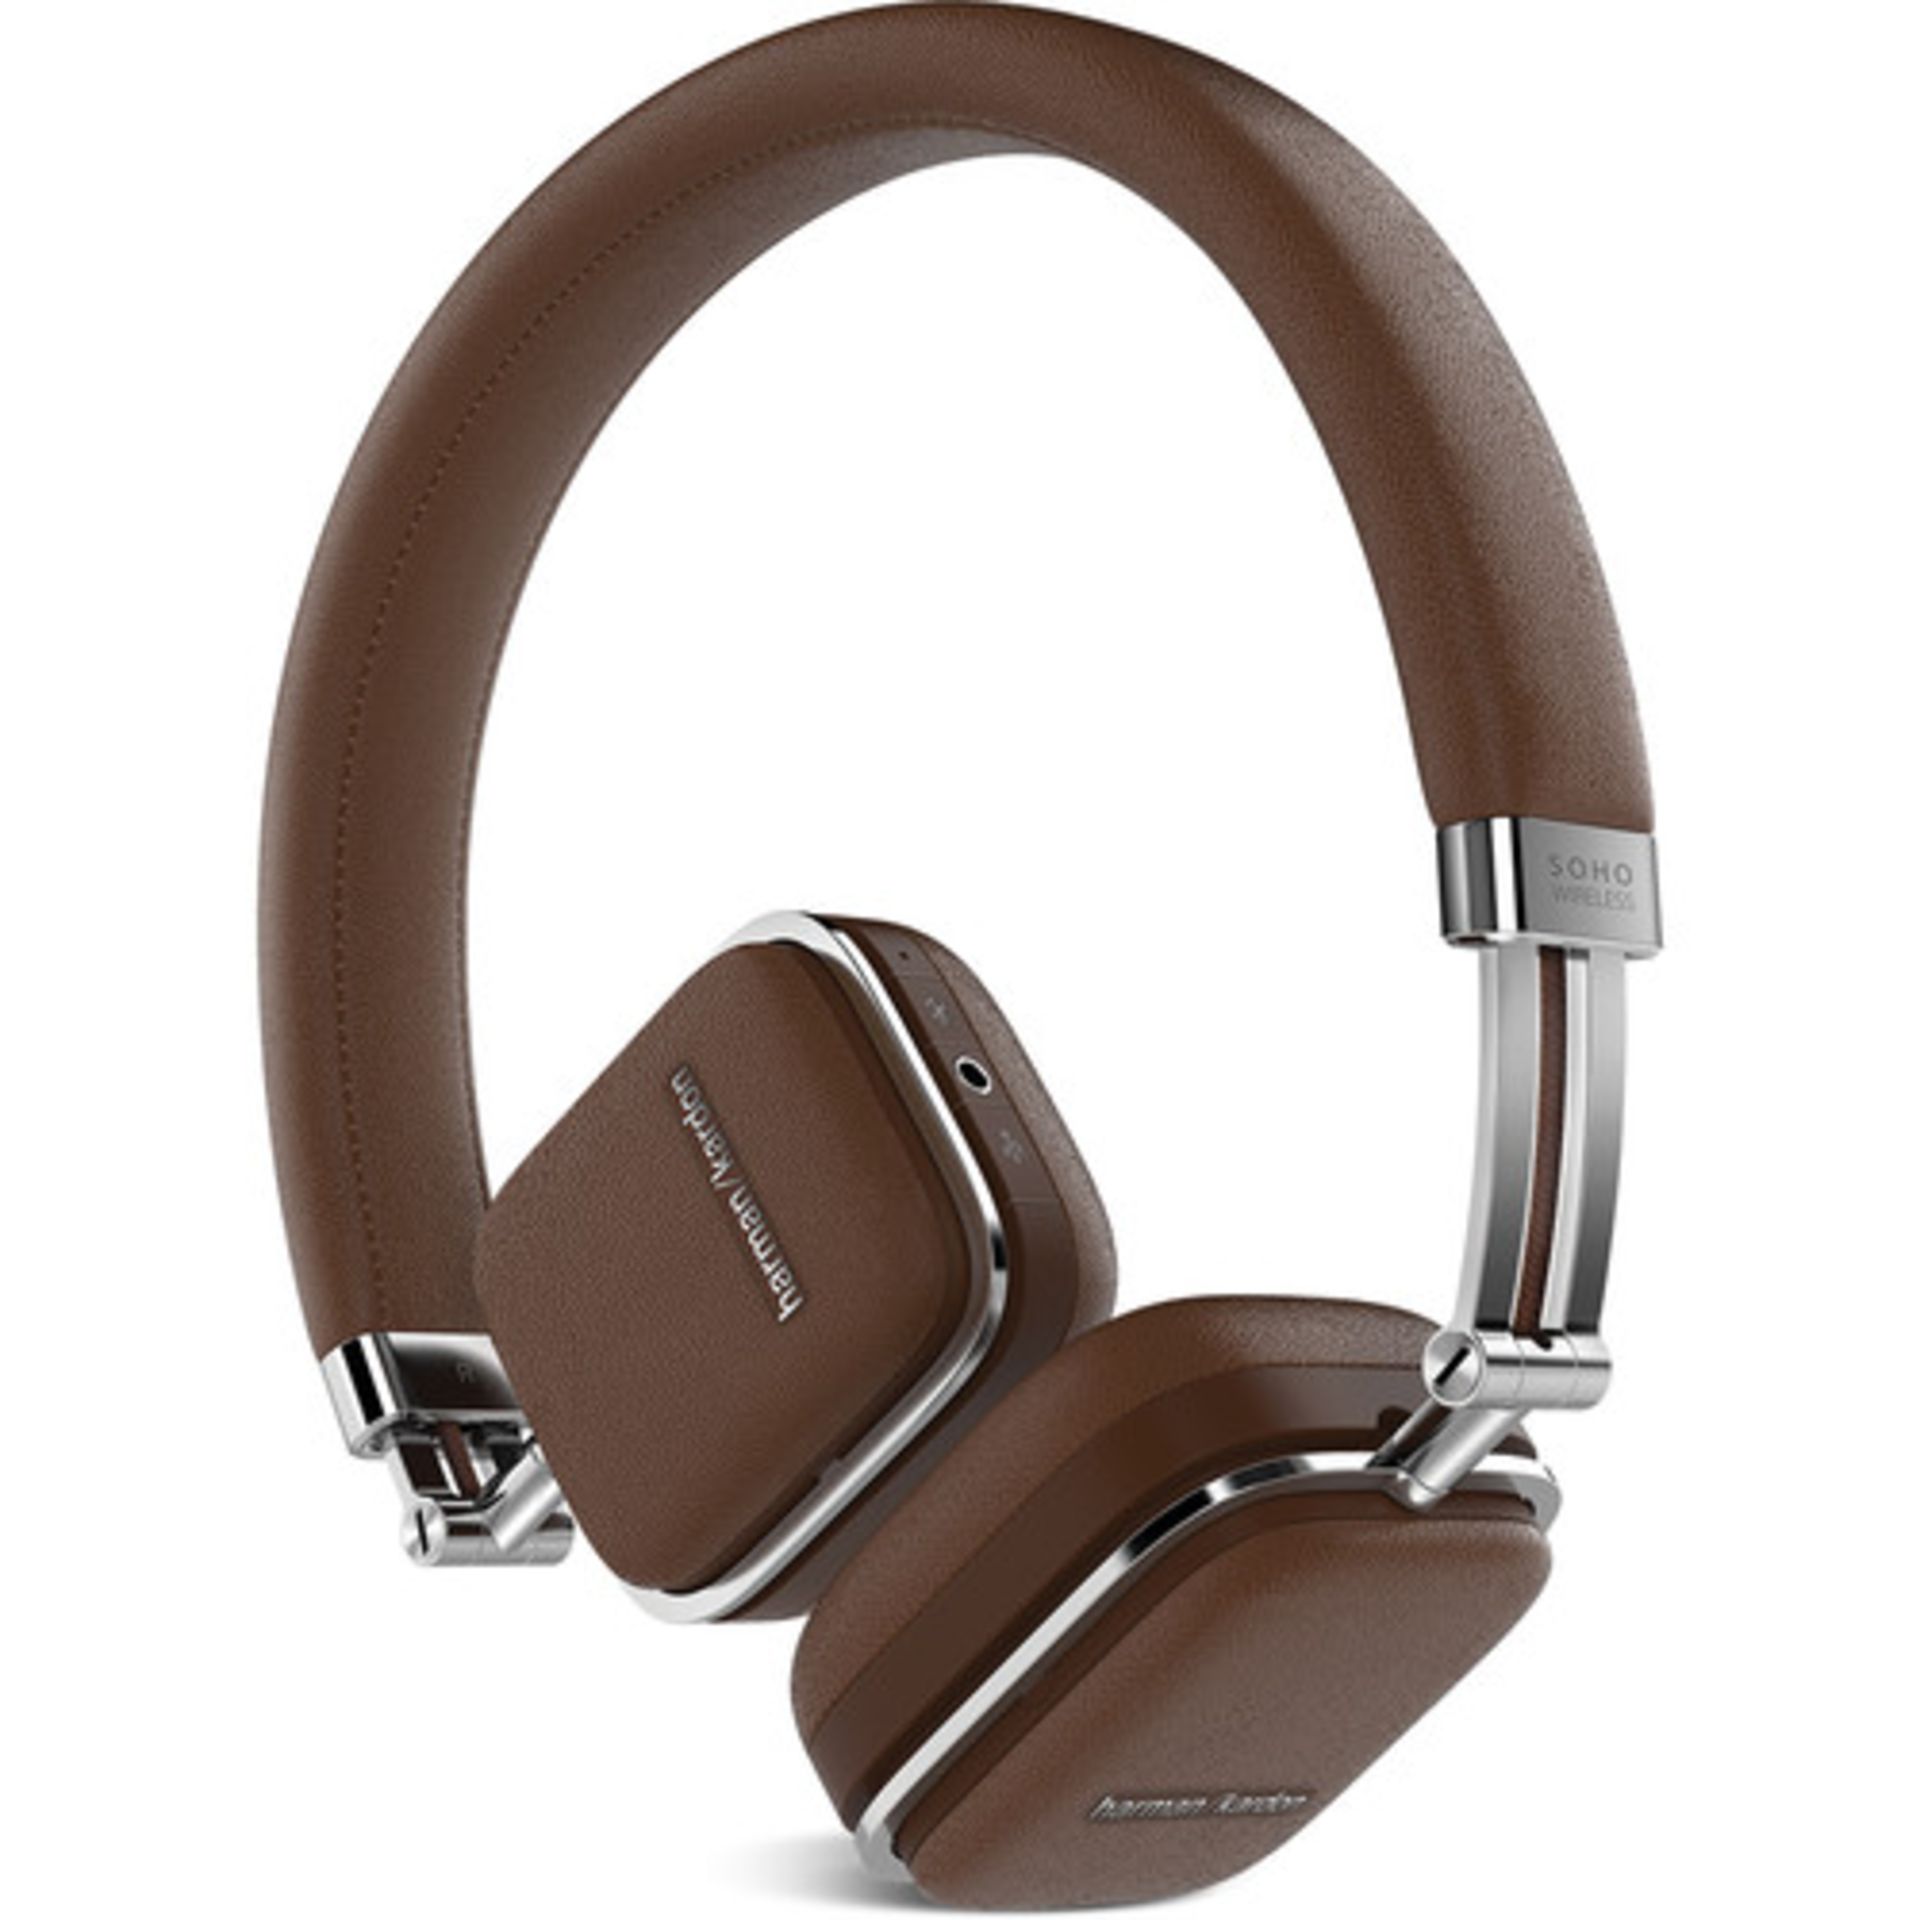 V Brand New Harman Kardon Soho Wireless On Ear Headset 30mm Drivers - Touch sensitive Control on ear - Image 2 of 2